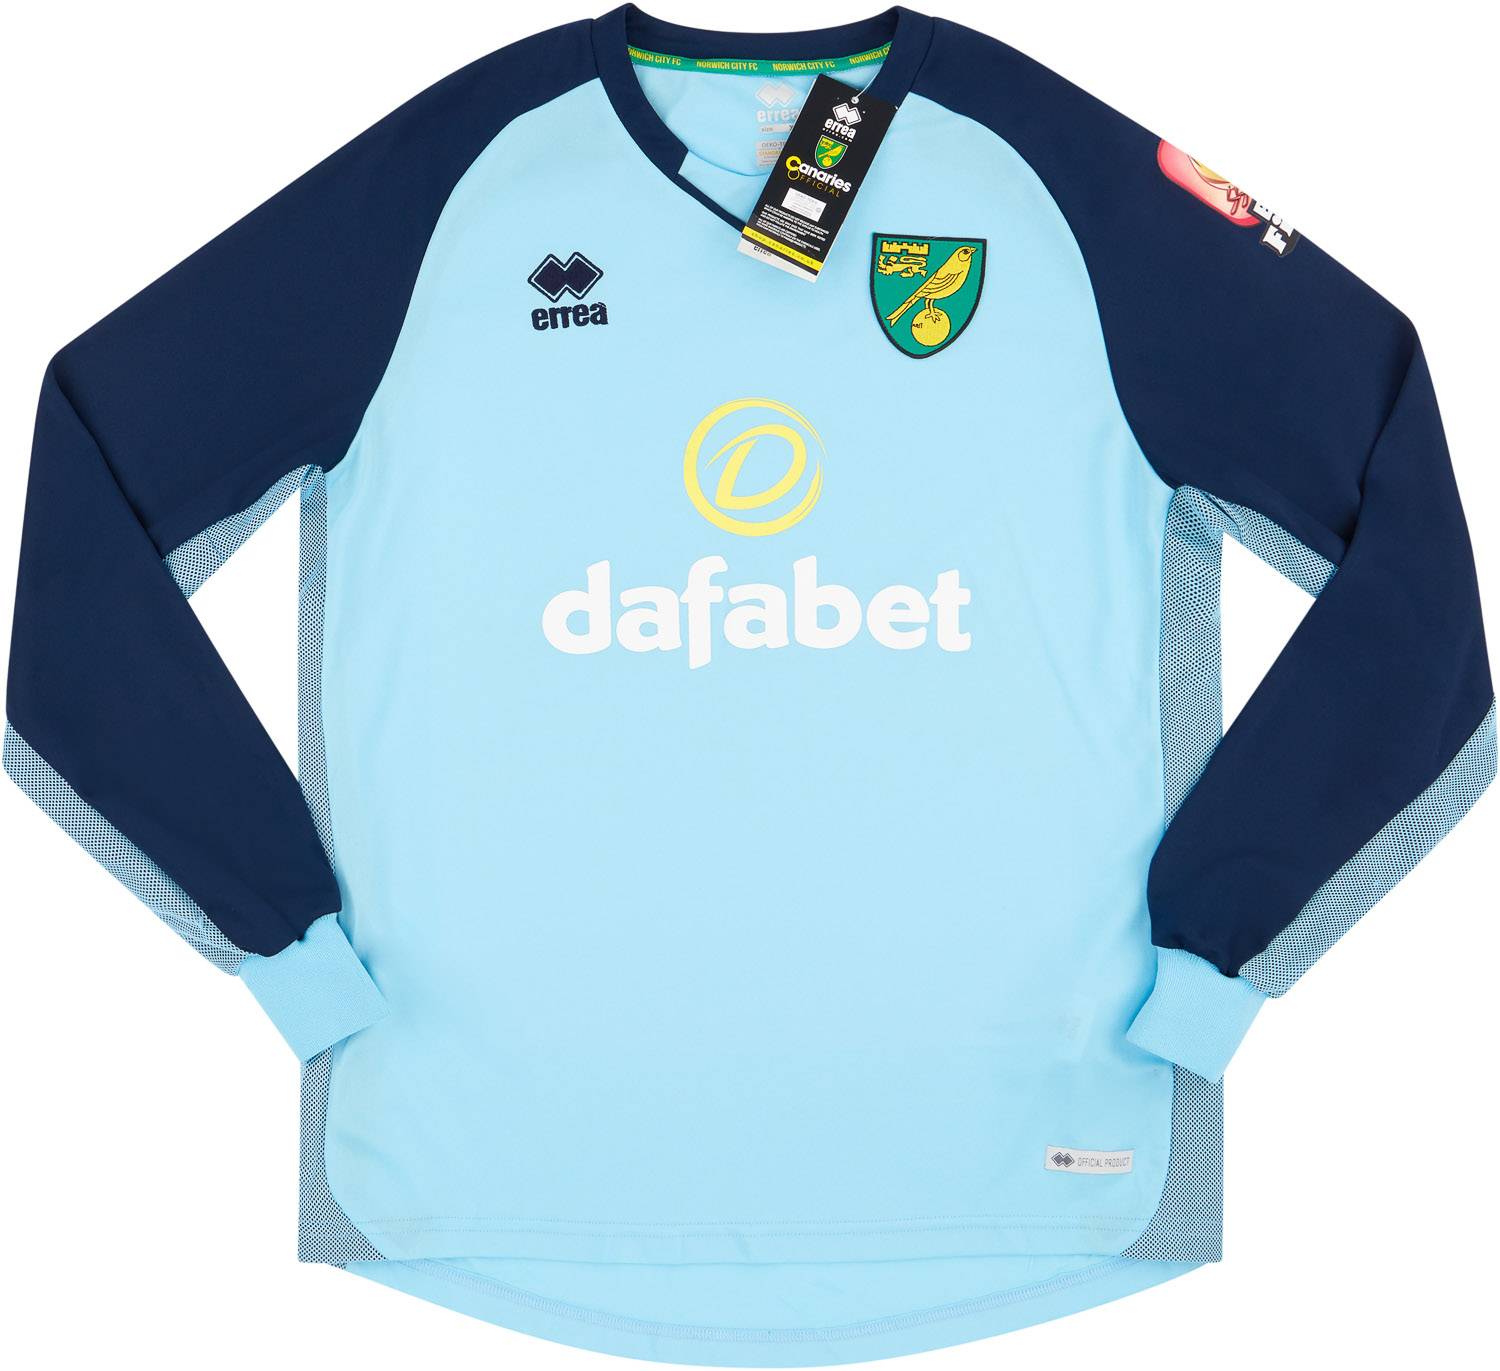 2019-20 Norwich GK Home Shirt